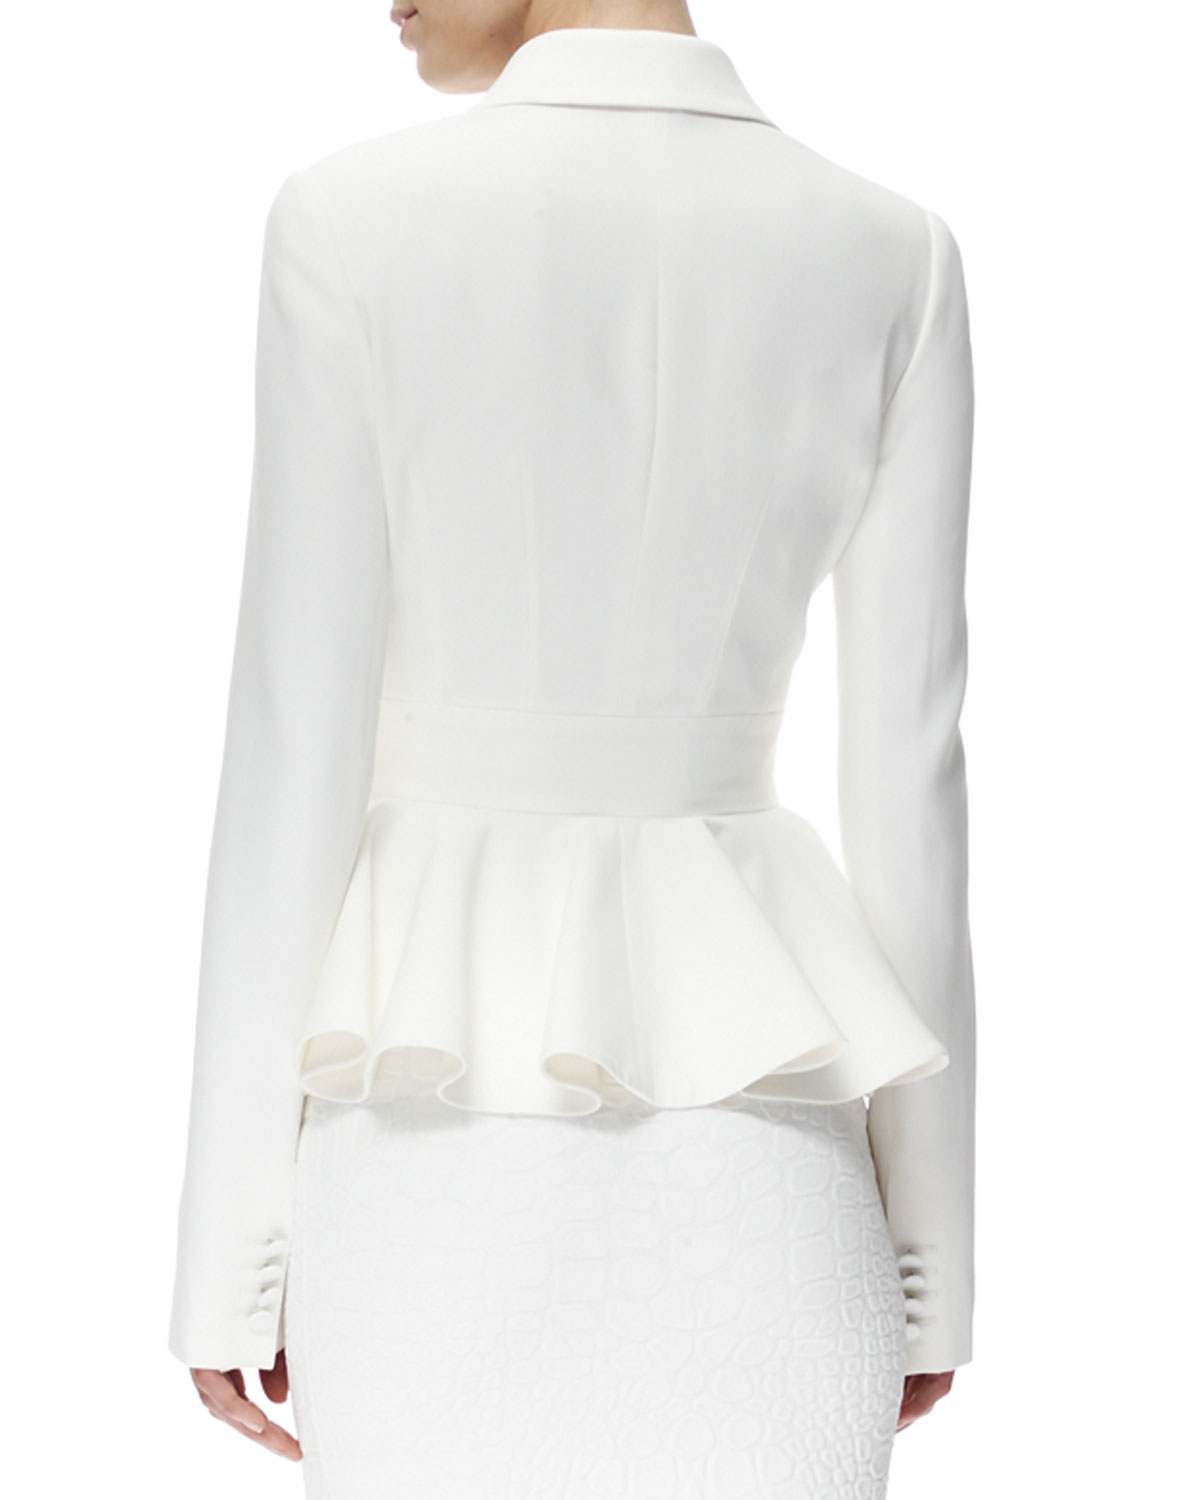 Lyst - Alexander Mcqueen Crepe Flounce Peplum Jacket in White